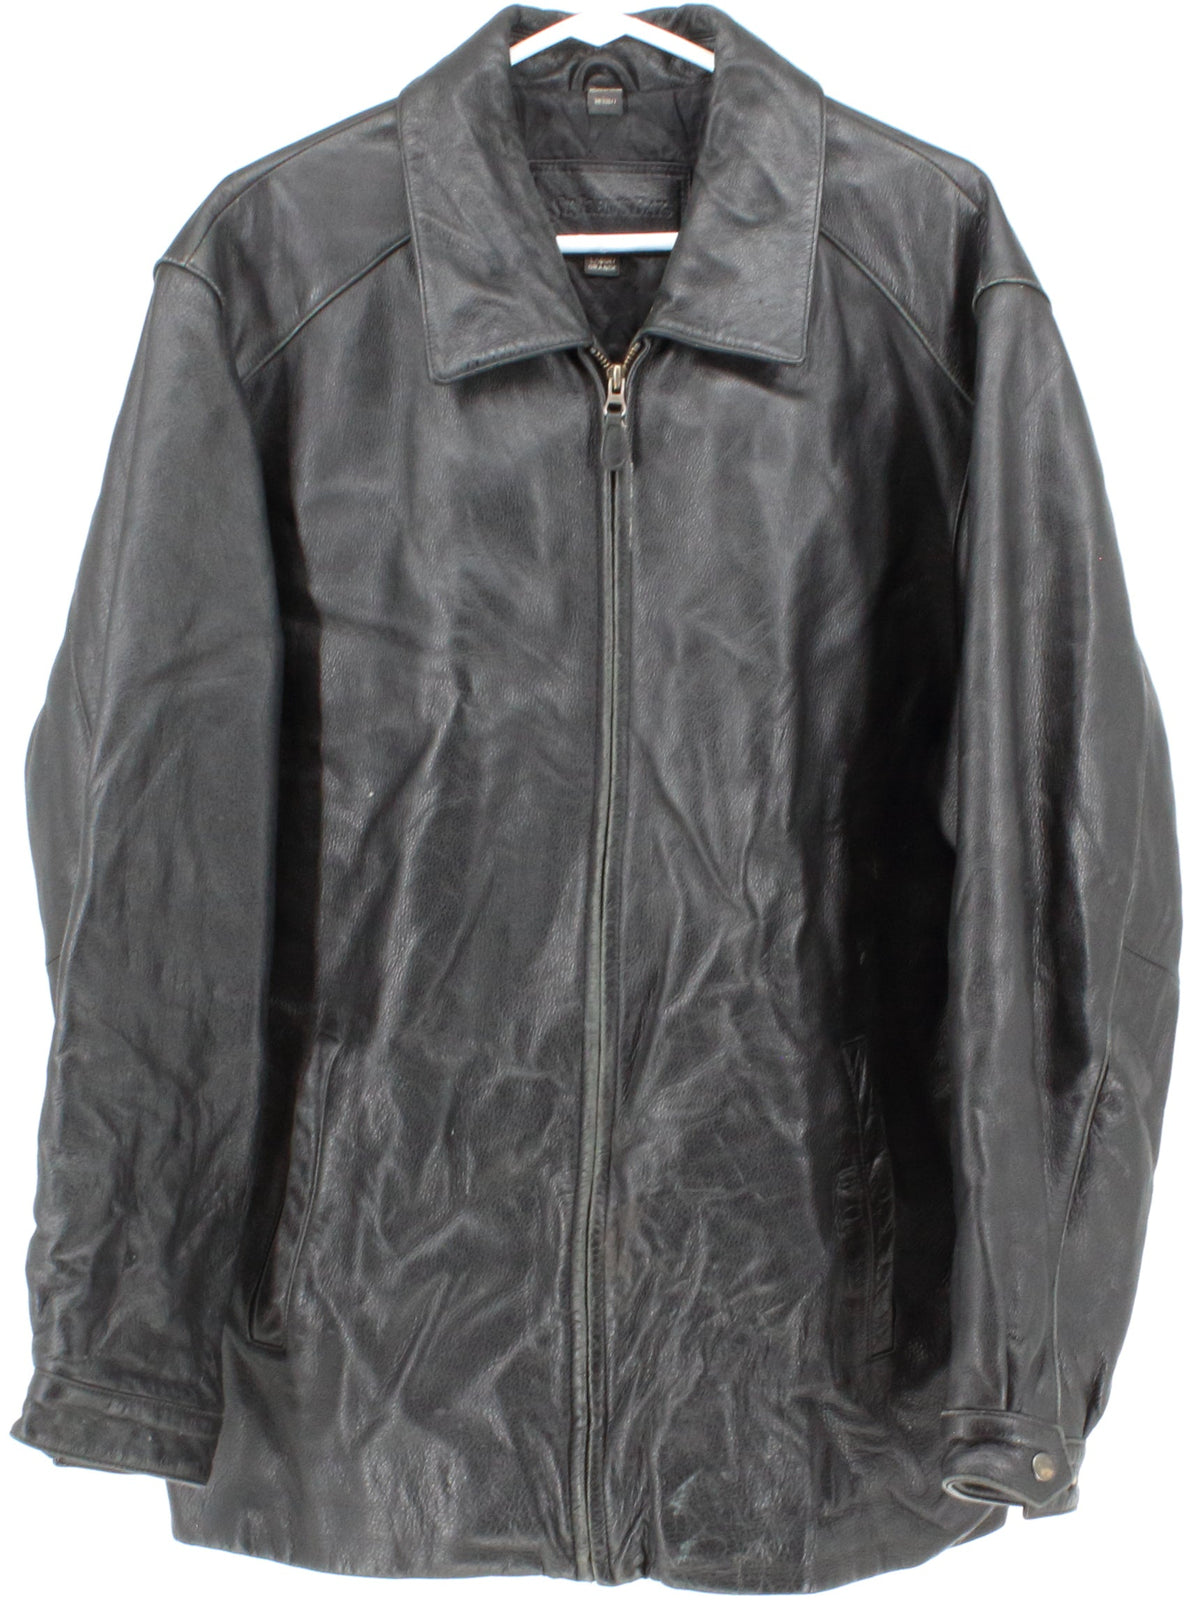 St. John's Bay Black Men's Leather Jacket